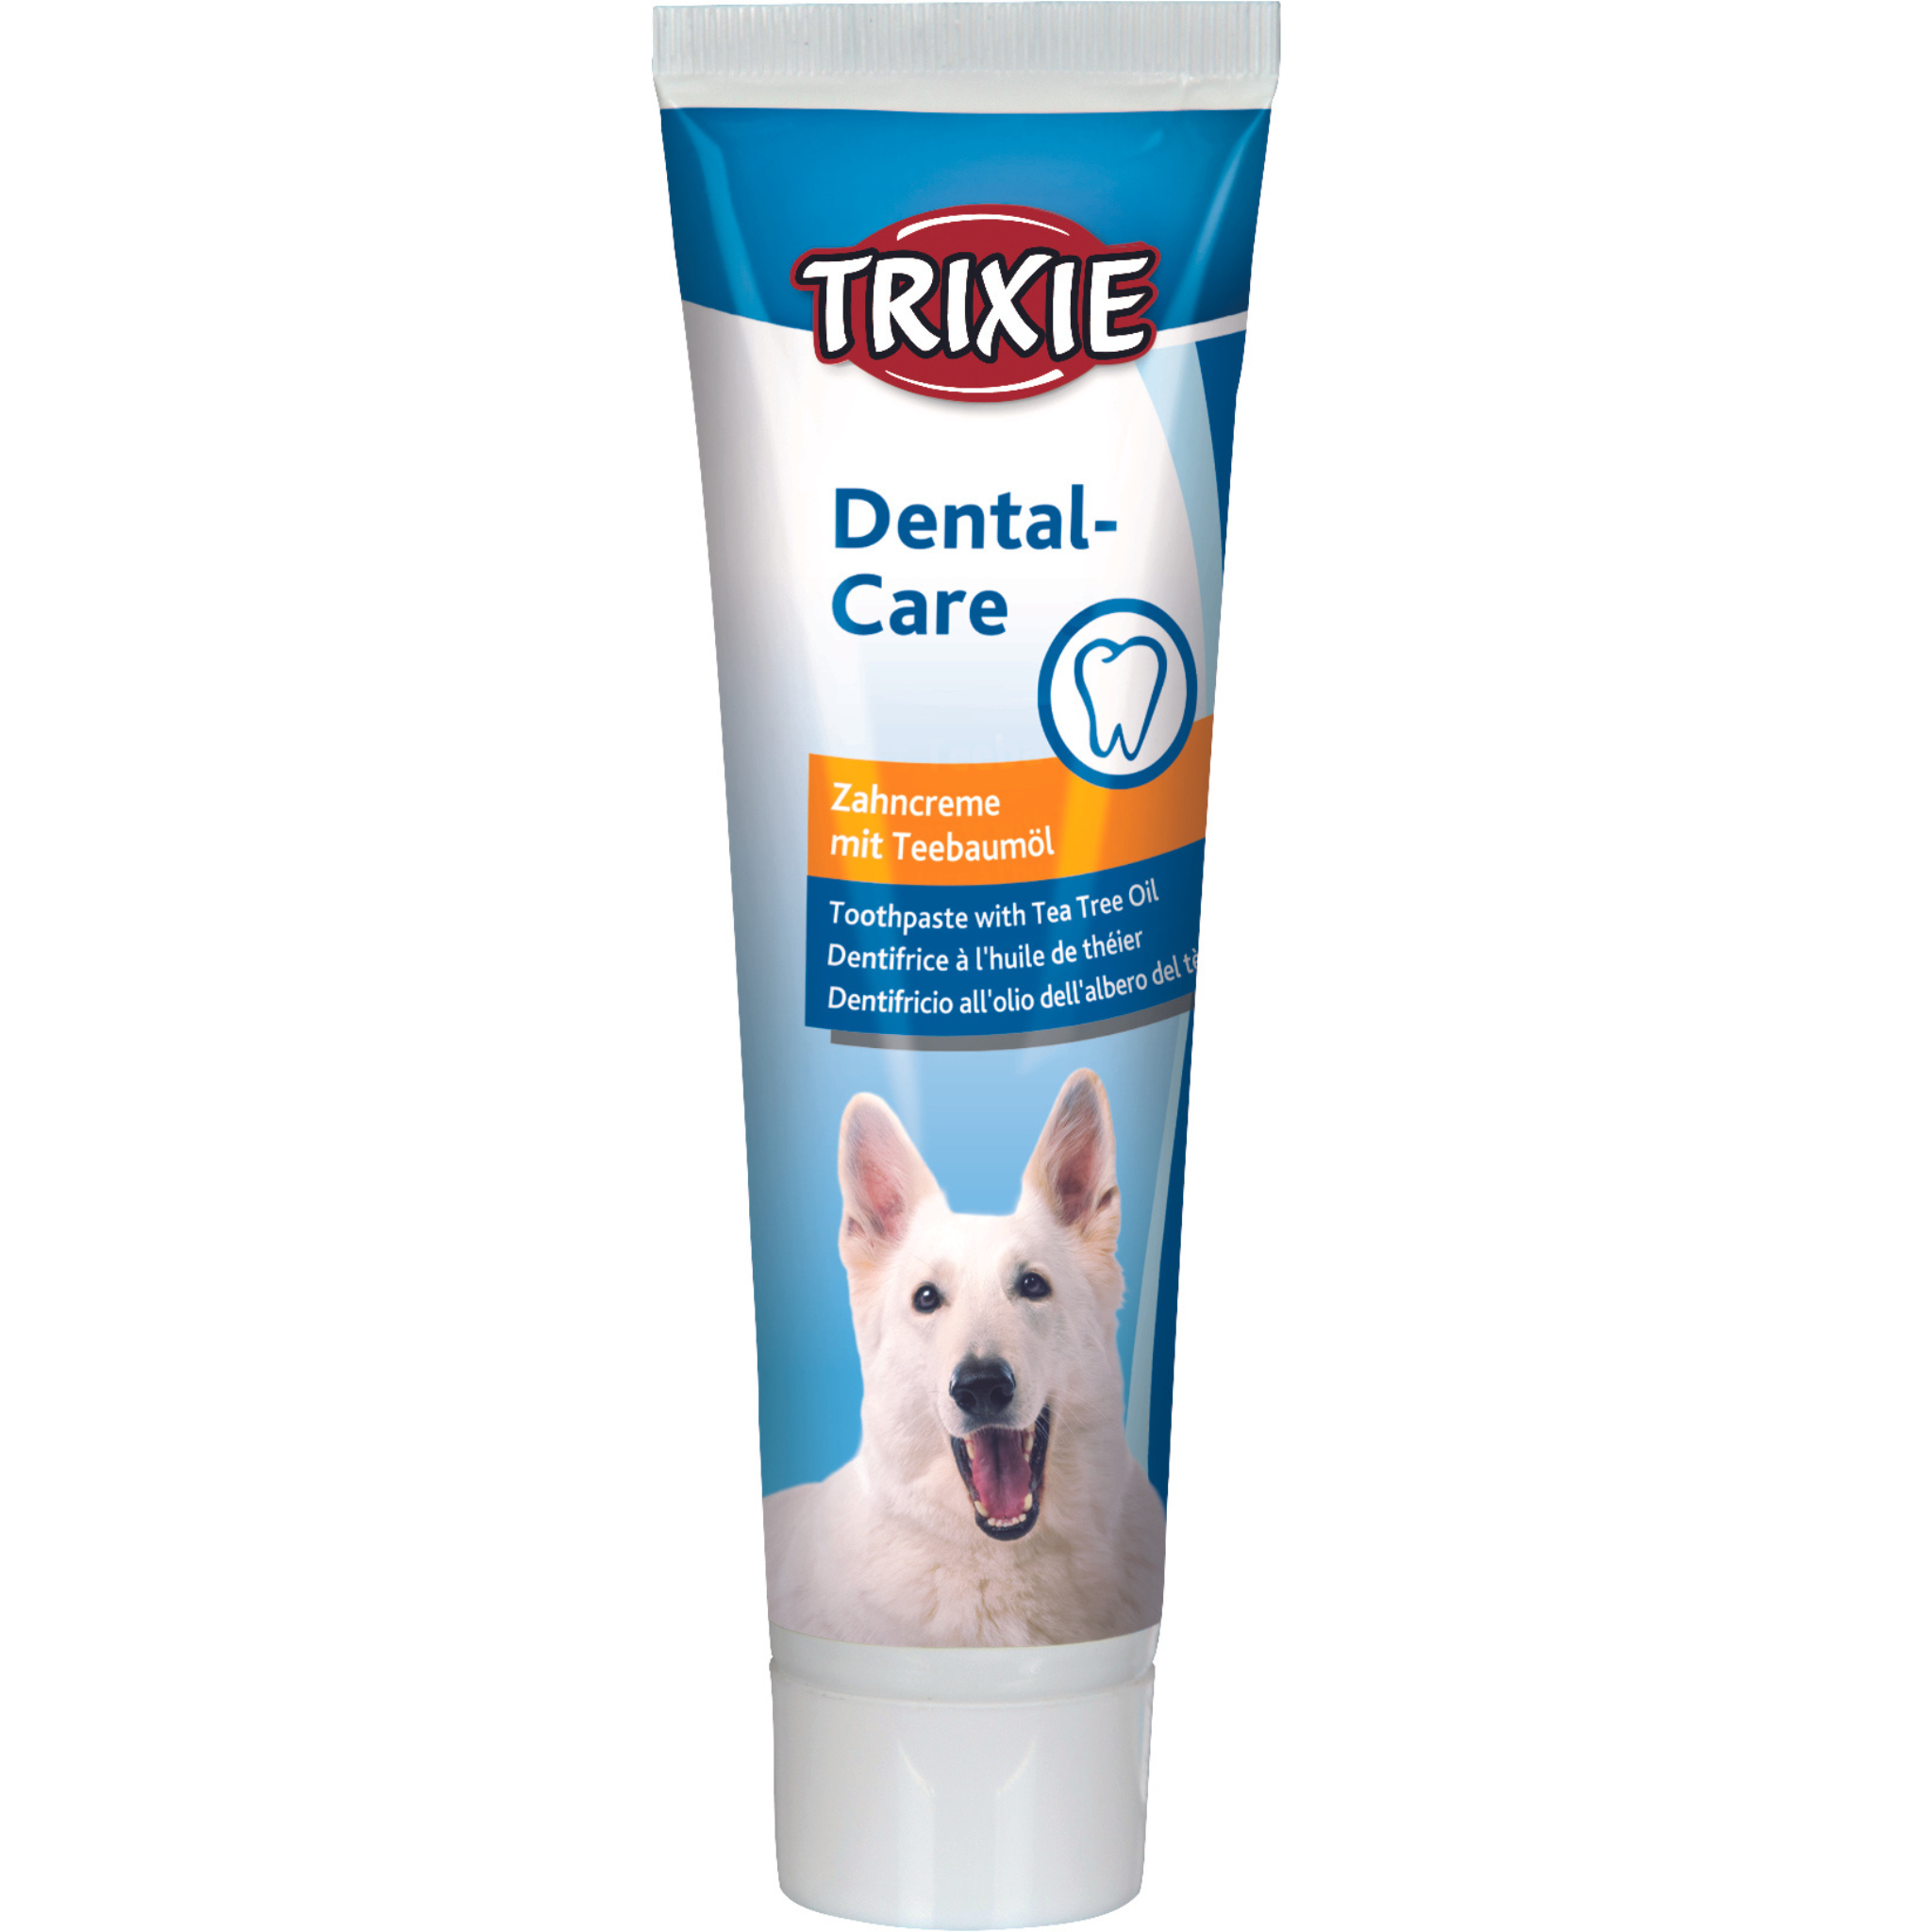 Trixie Dog Toothpaste with Tea Tree Oil Flavour, 100gm